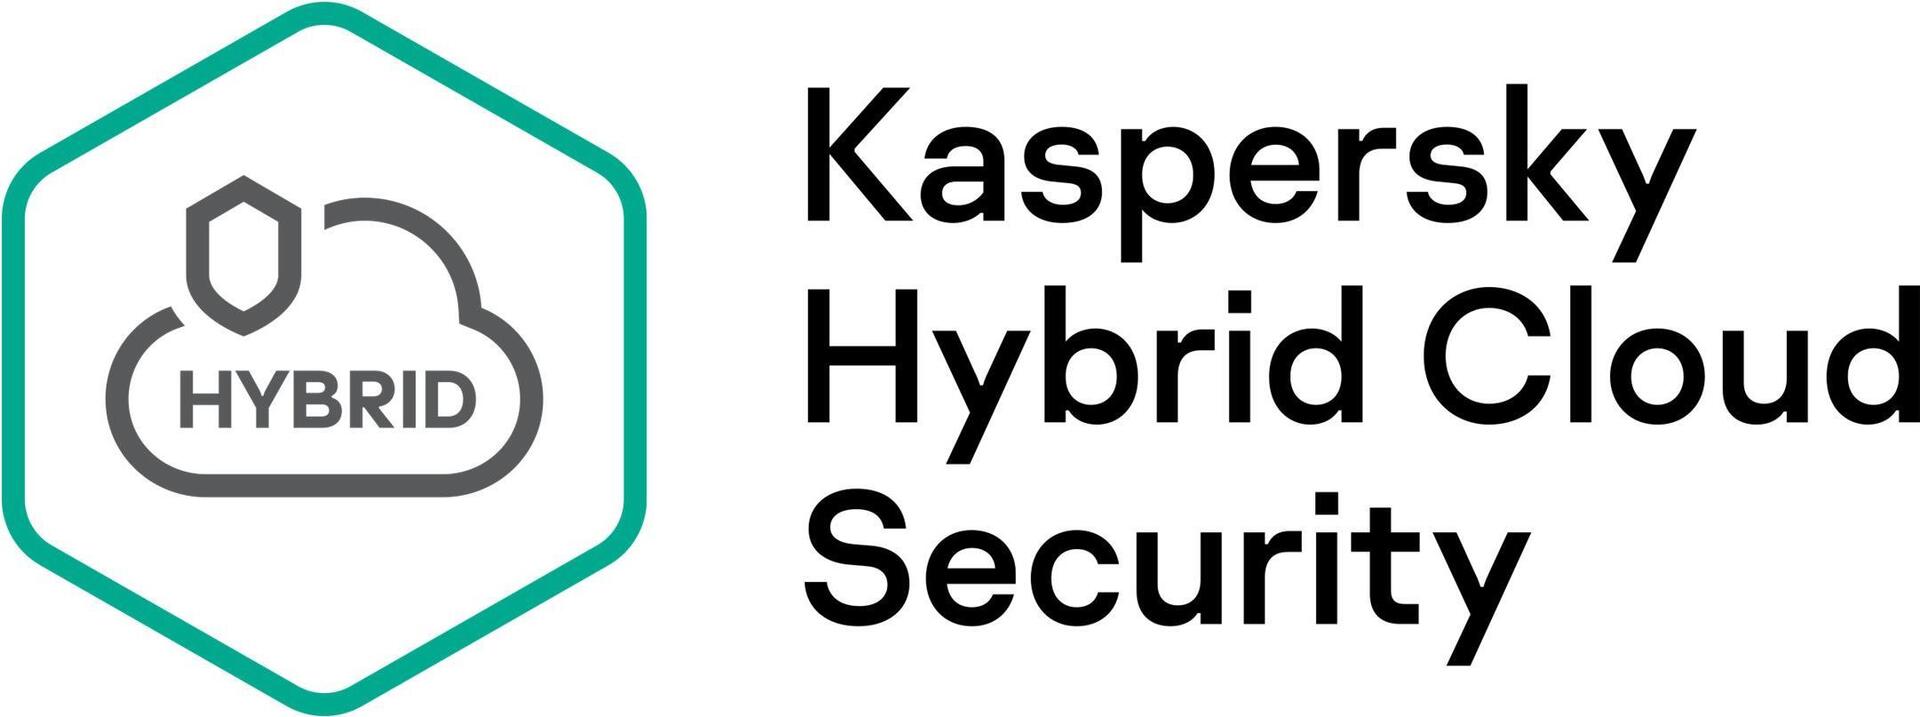 Kaspersky Hybrid Cloud Security Desktop (KL4155XAQT8)